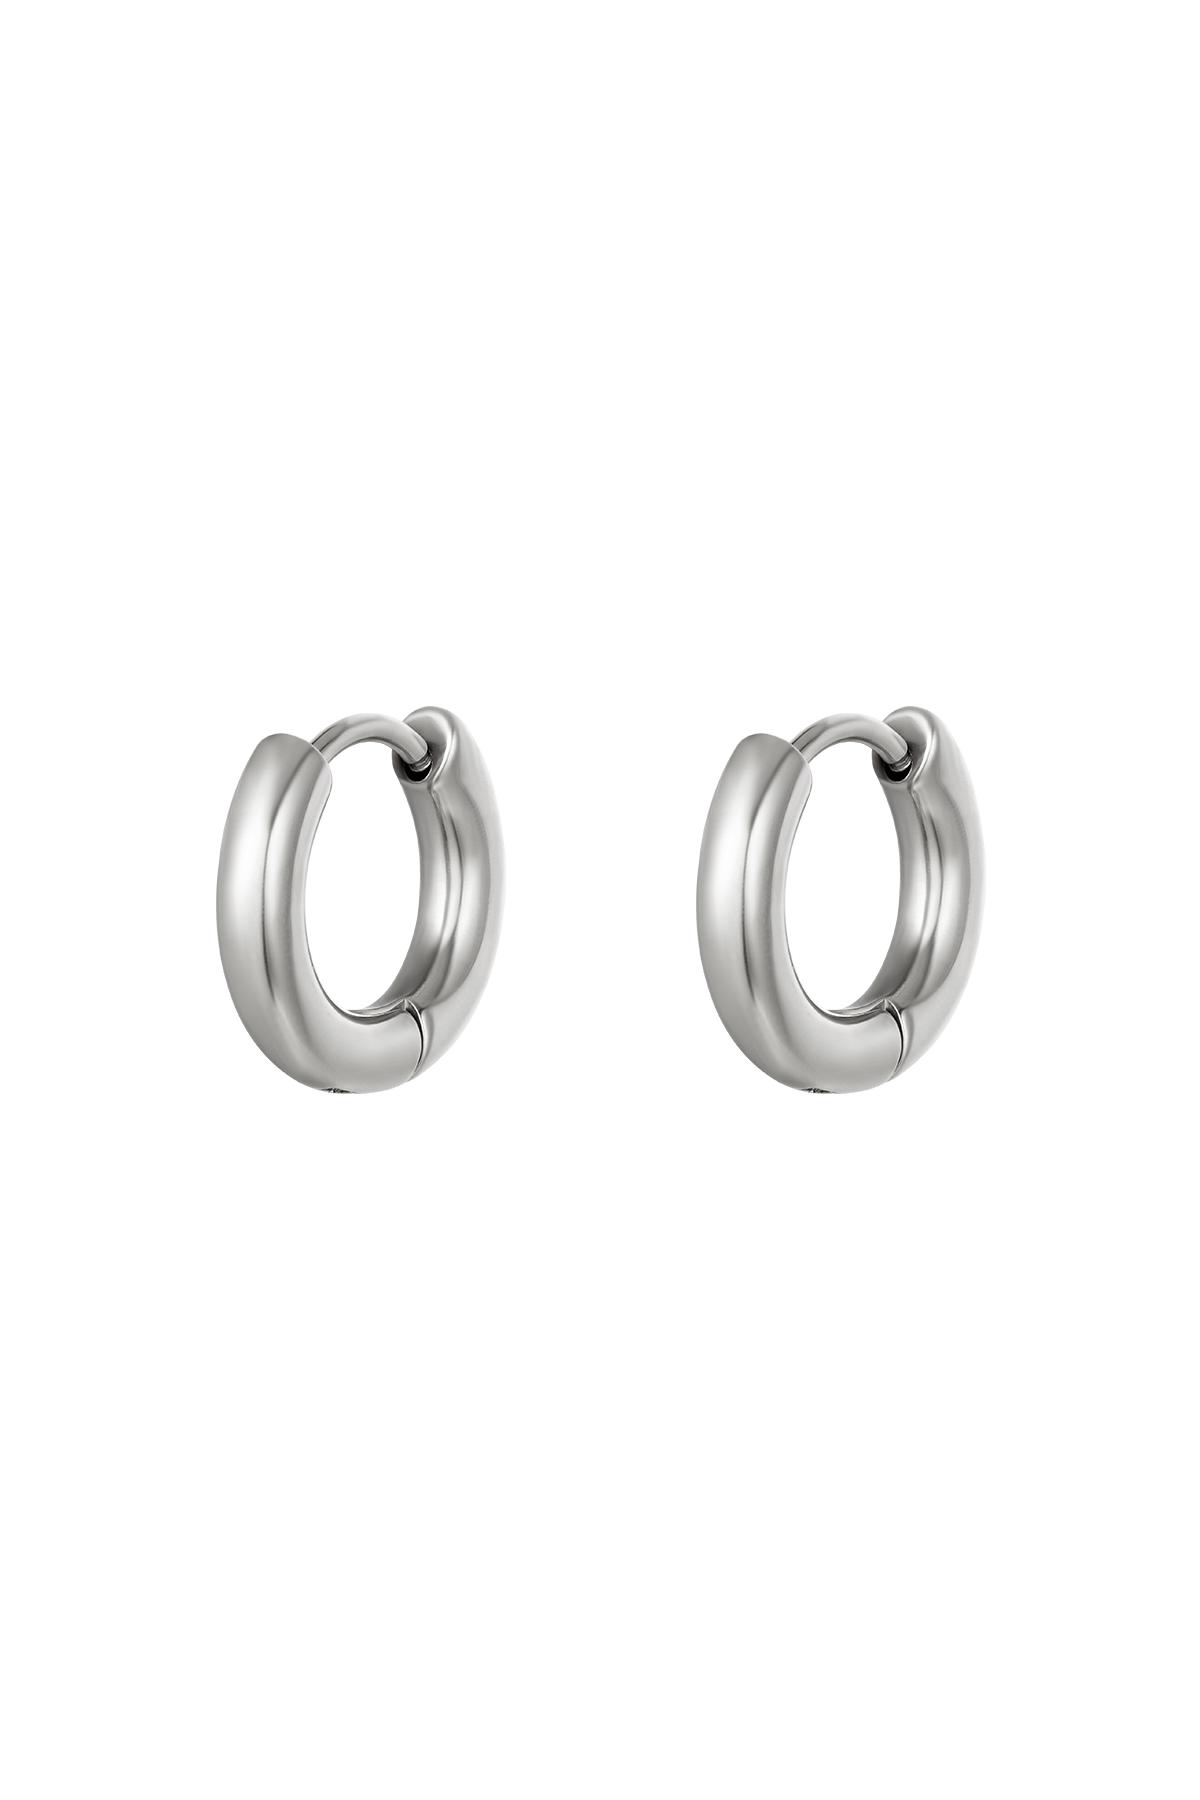 Basic creoles earrings - mini Silver Stainless Steel